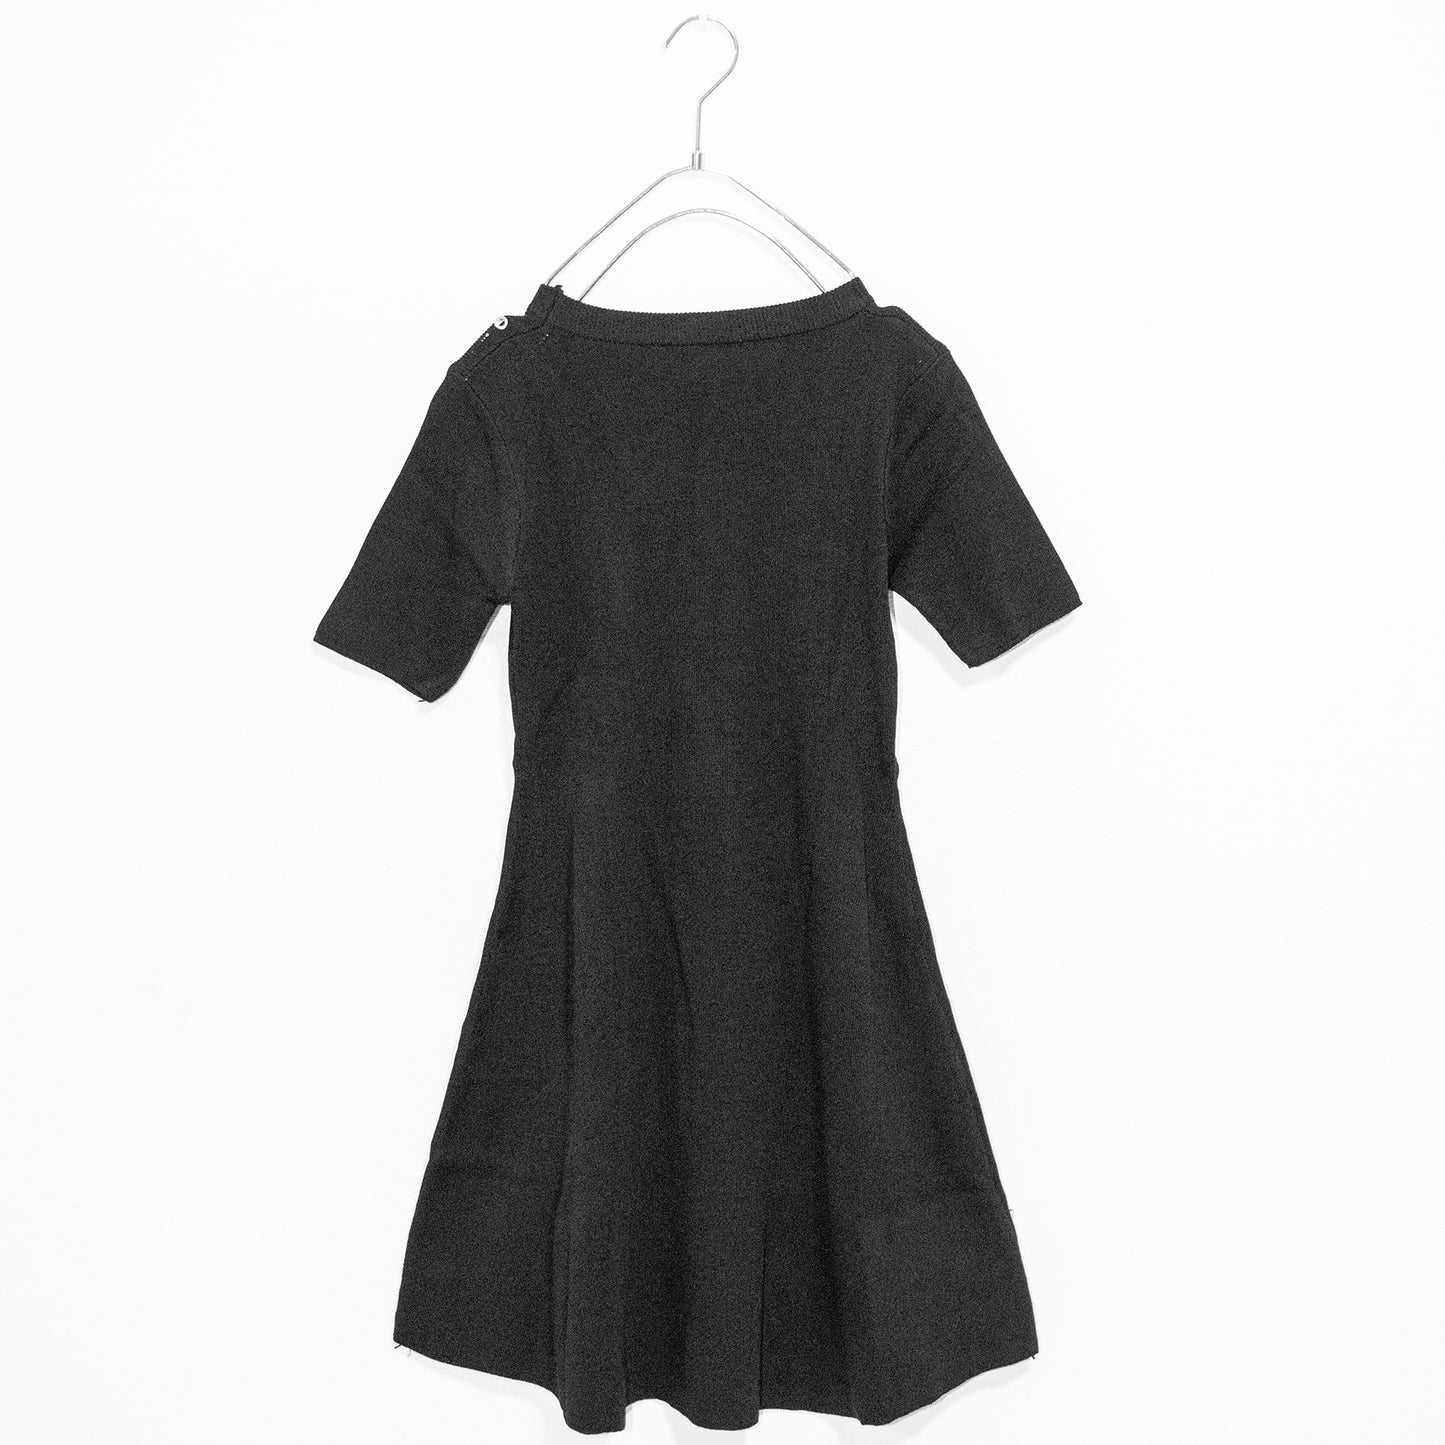 Ring Line Knit Dress Black - YOUAREMYPOISON